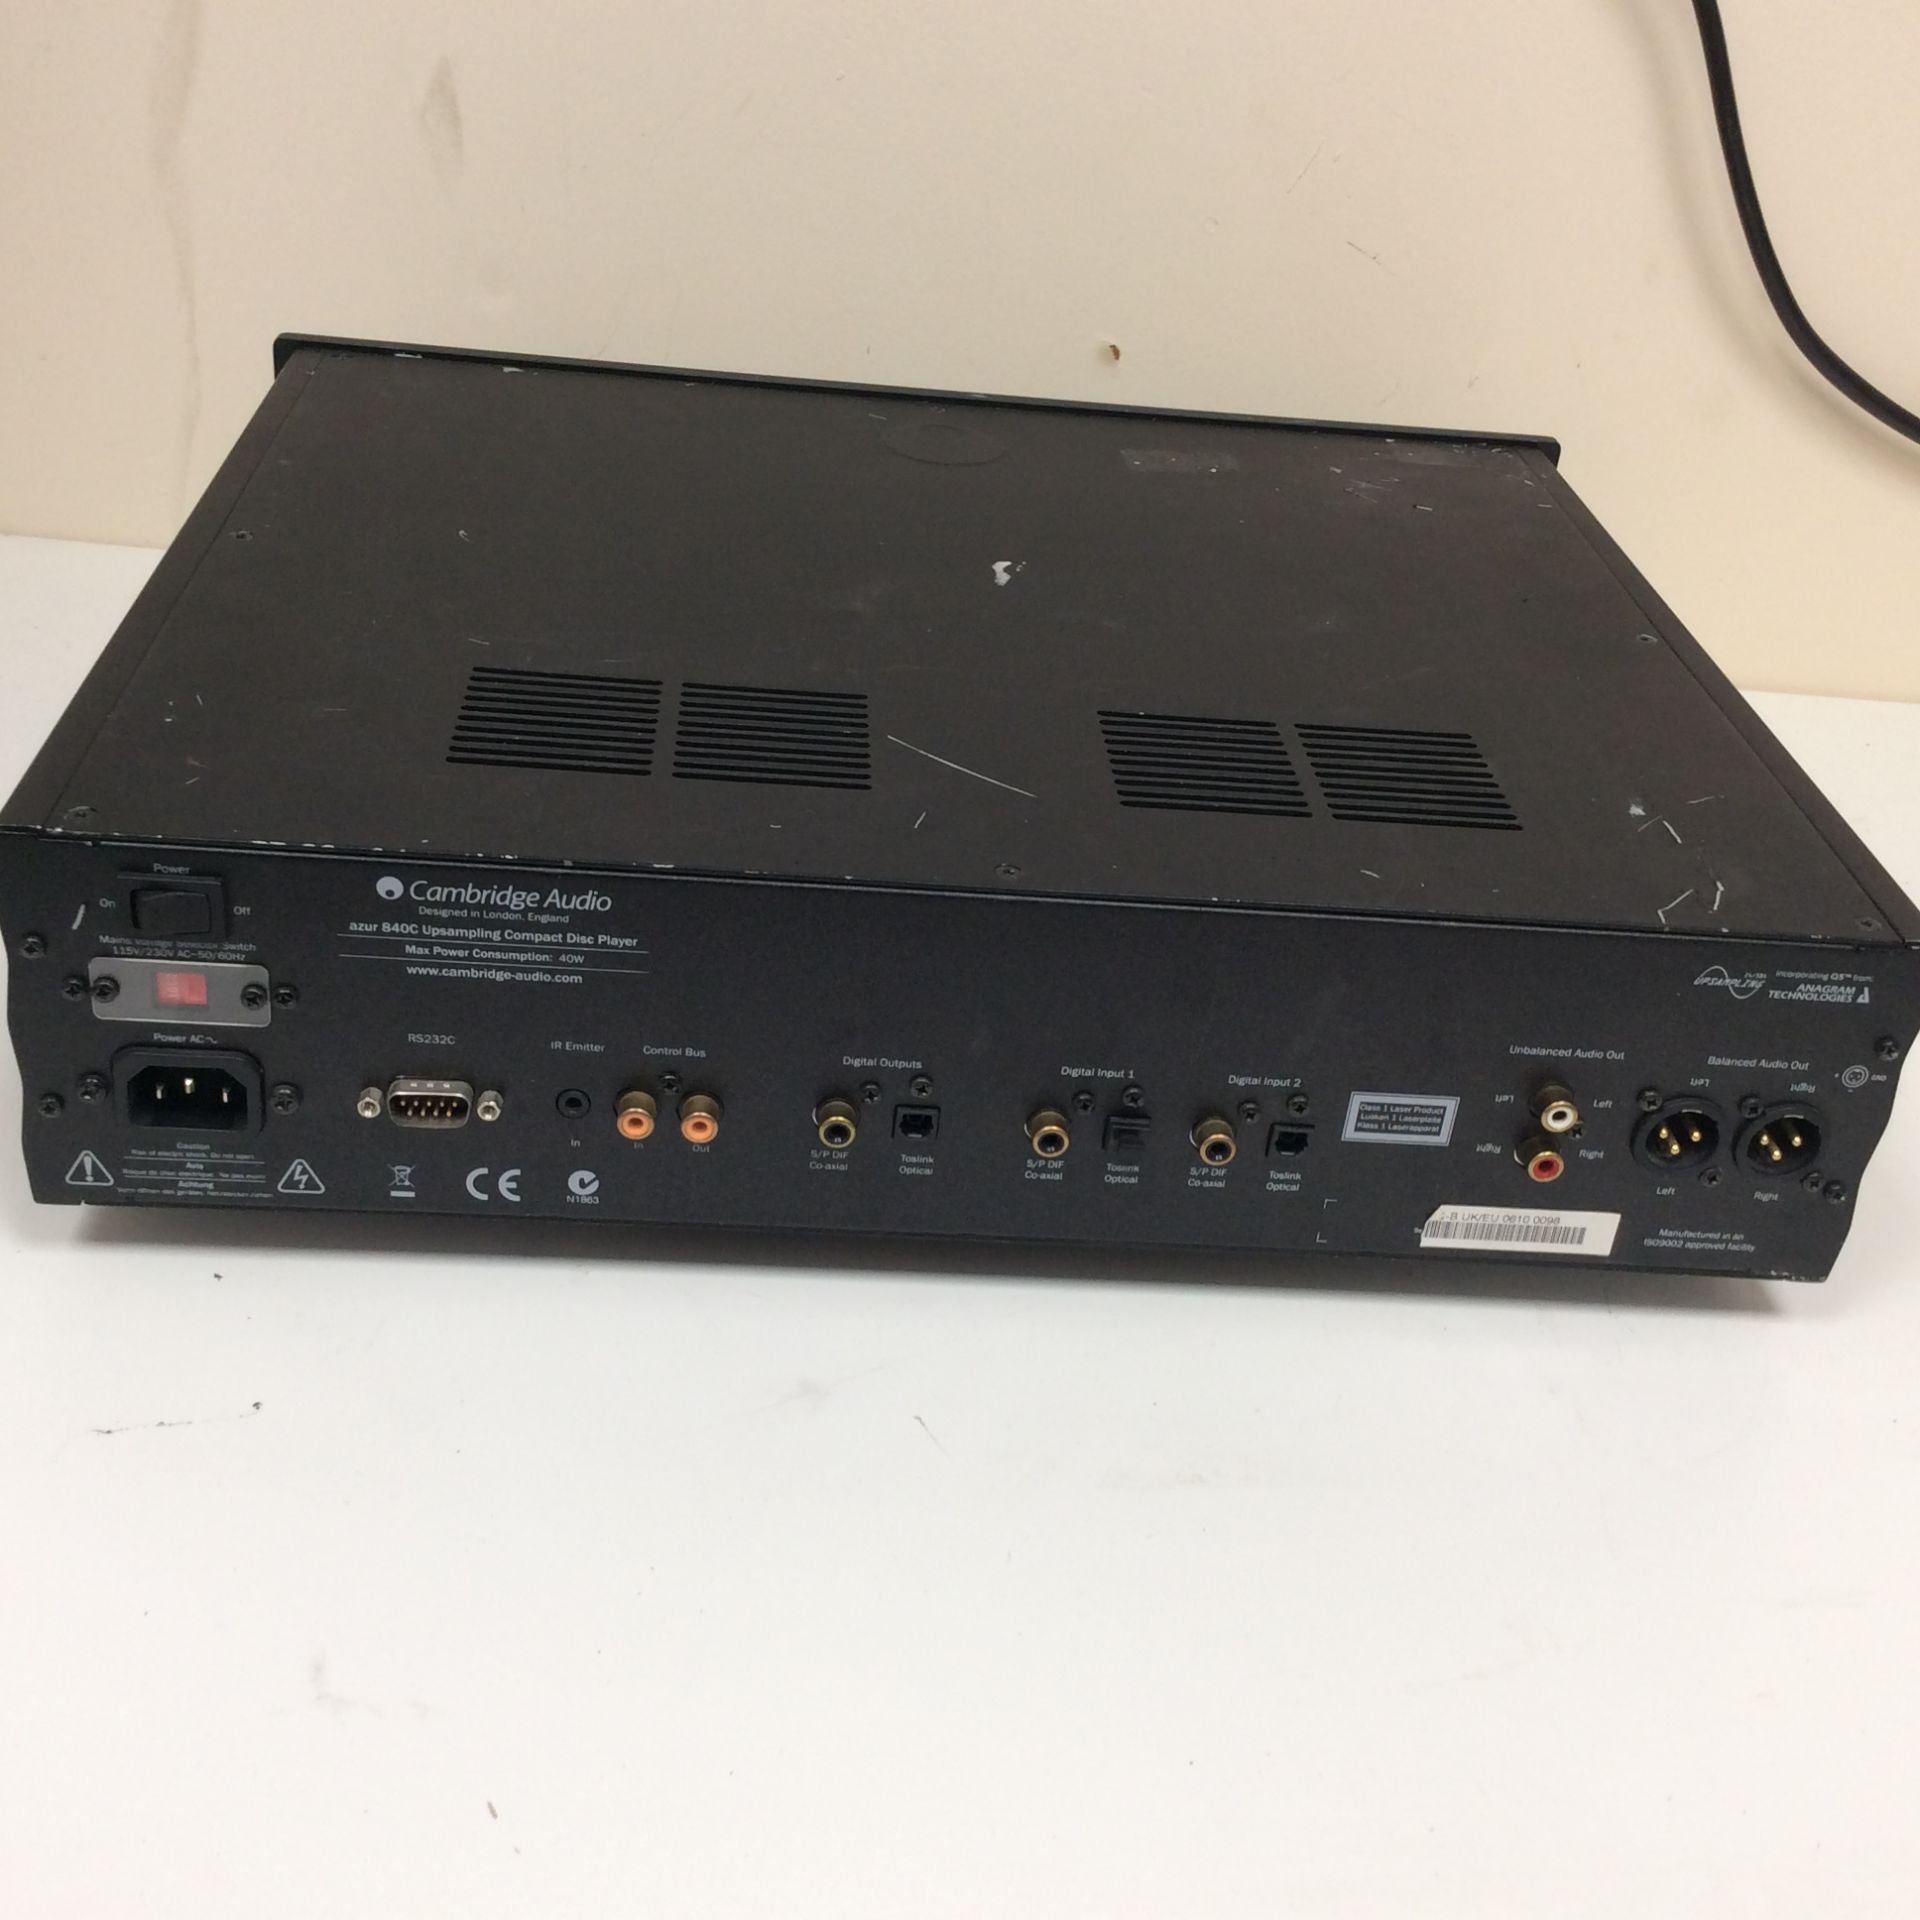 Cambridge audio azur 840c upsampling compact disc player - Image 4 of 4